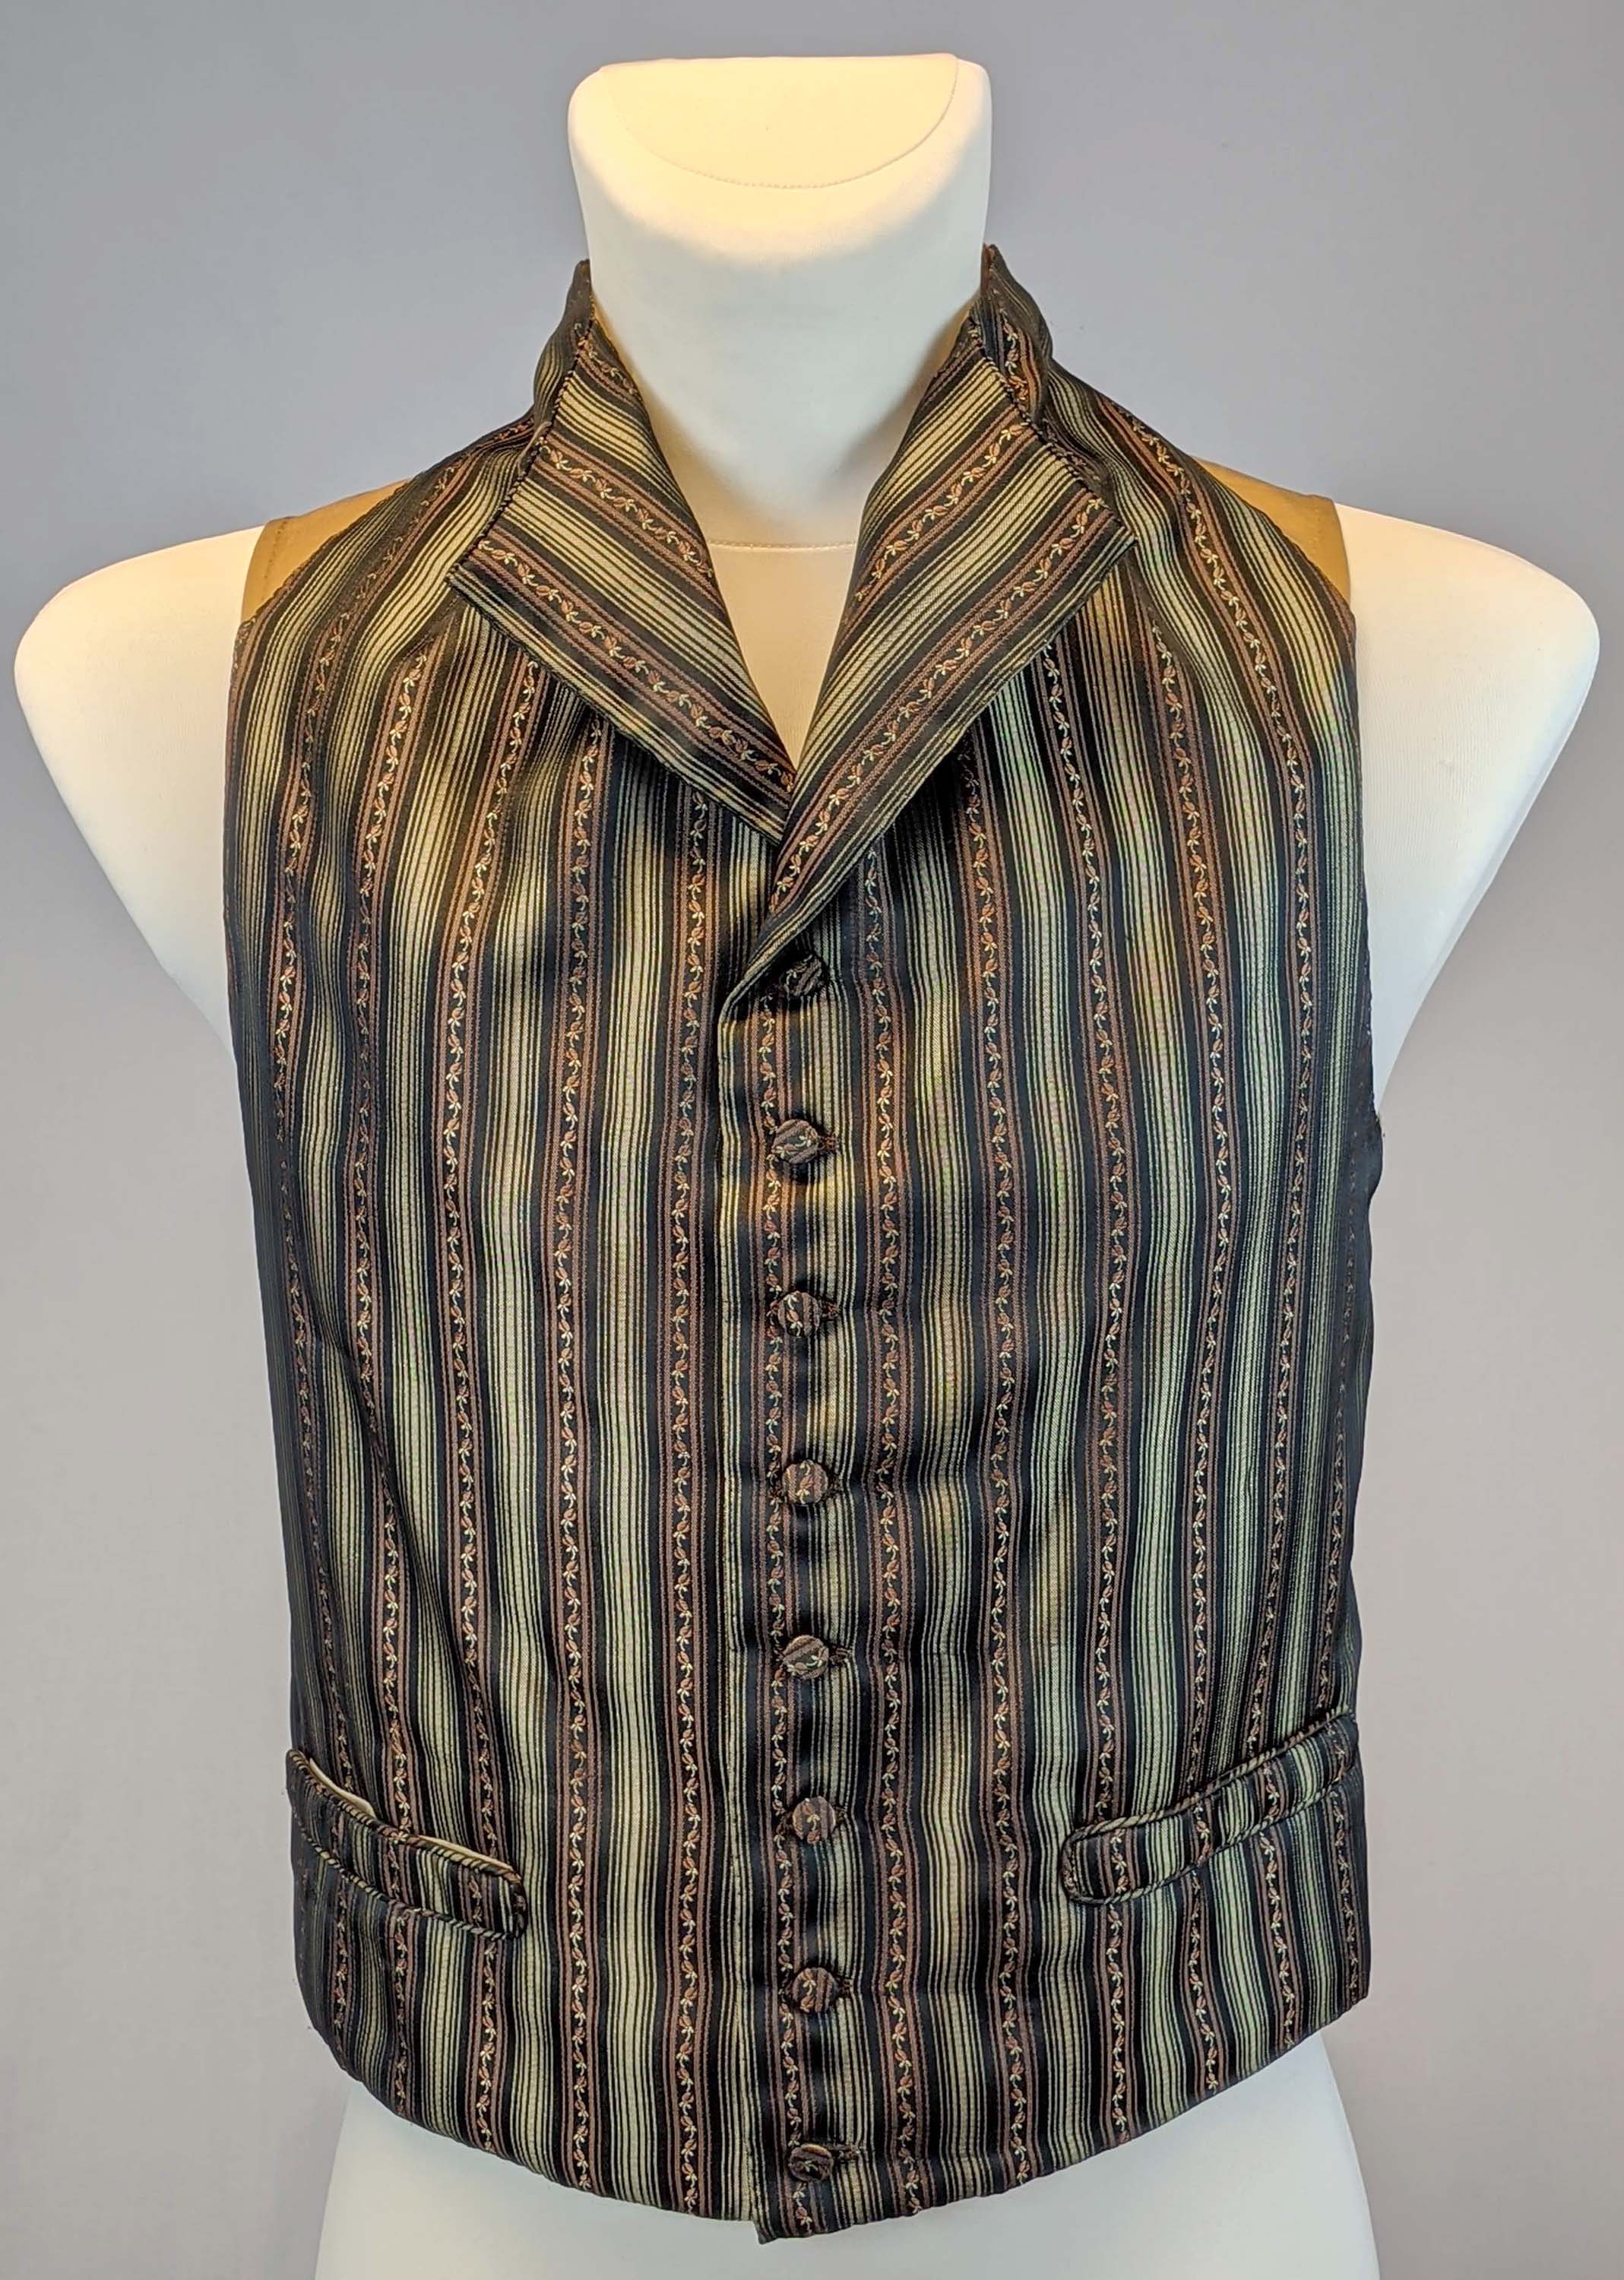 Georgian Mens Waistcoat, late 18th century Sewing Pattern #0819 Size US 34-56 (EU 44-66) PDF Download